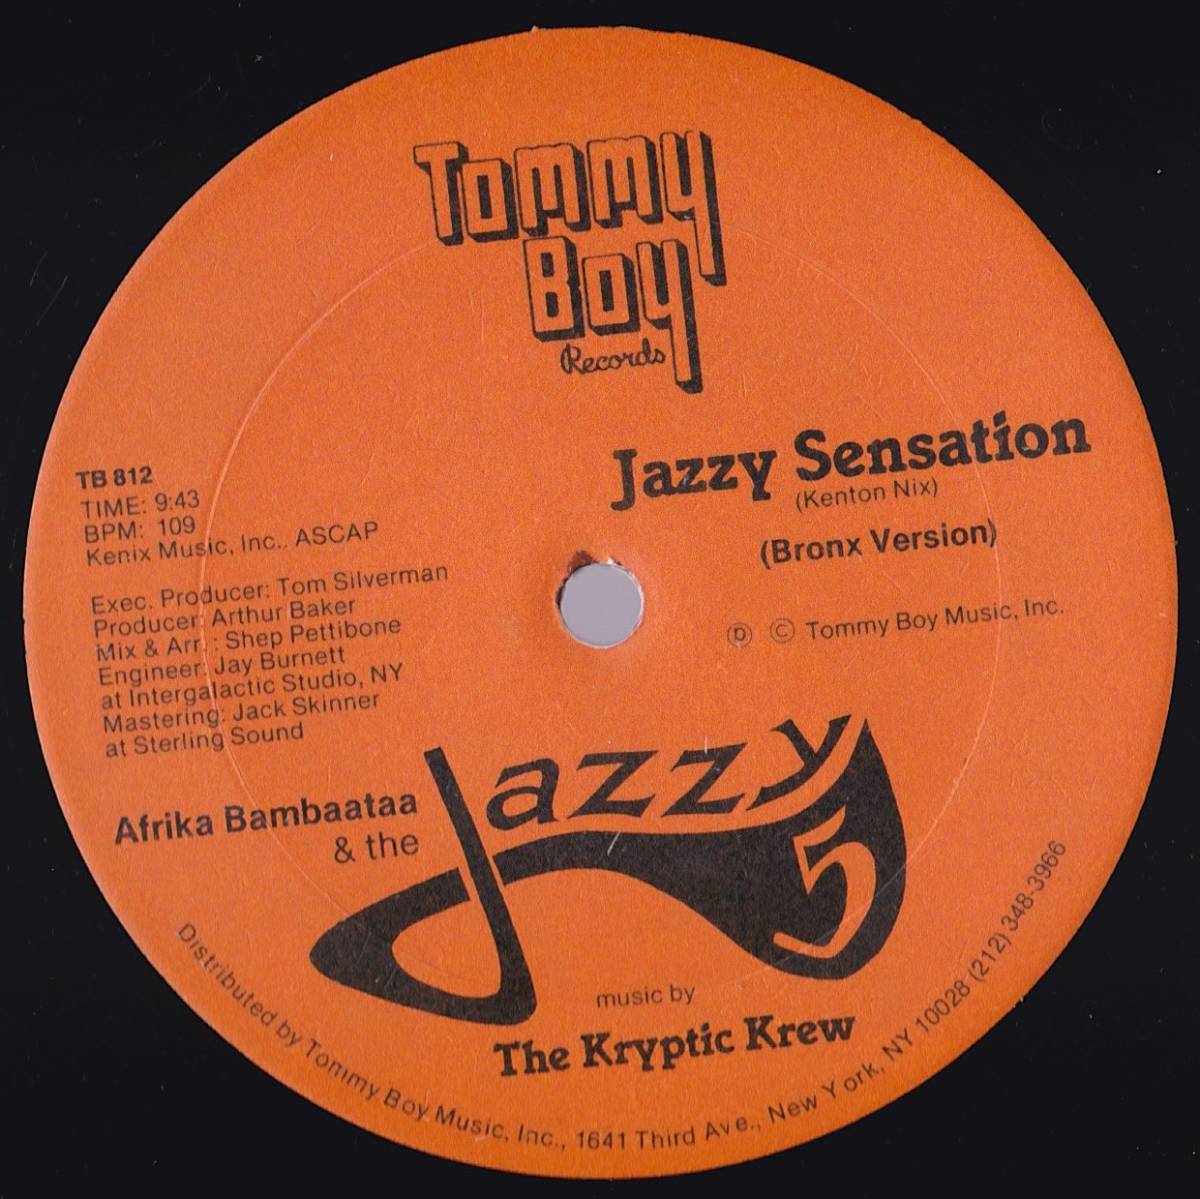 Old school・Rap 12inch★AFRIKA BAMBAATAA & THE JAZZY 5 / THE KRYPTIC KREW featuring TINA B / Jazzy sensation★ boy★